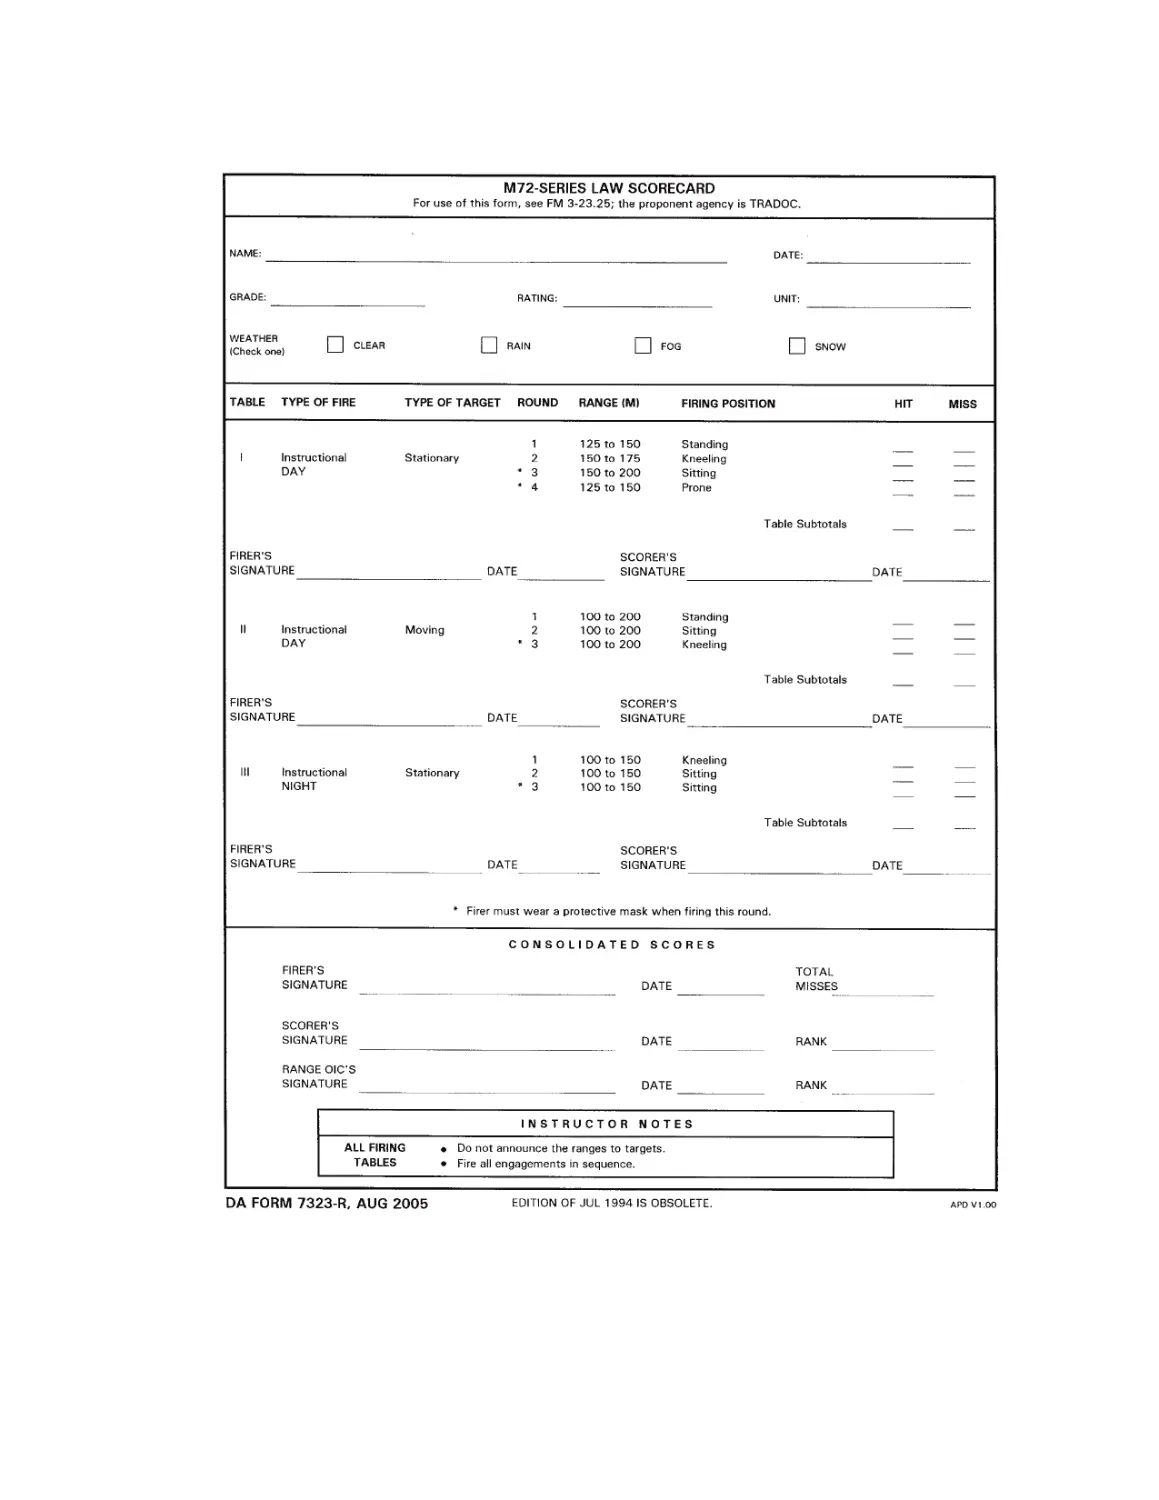 DA Form 7323-R (M72-Series Law Scorecard